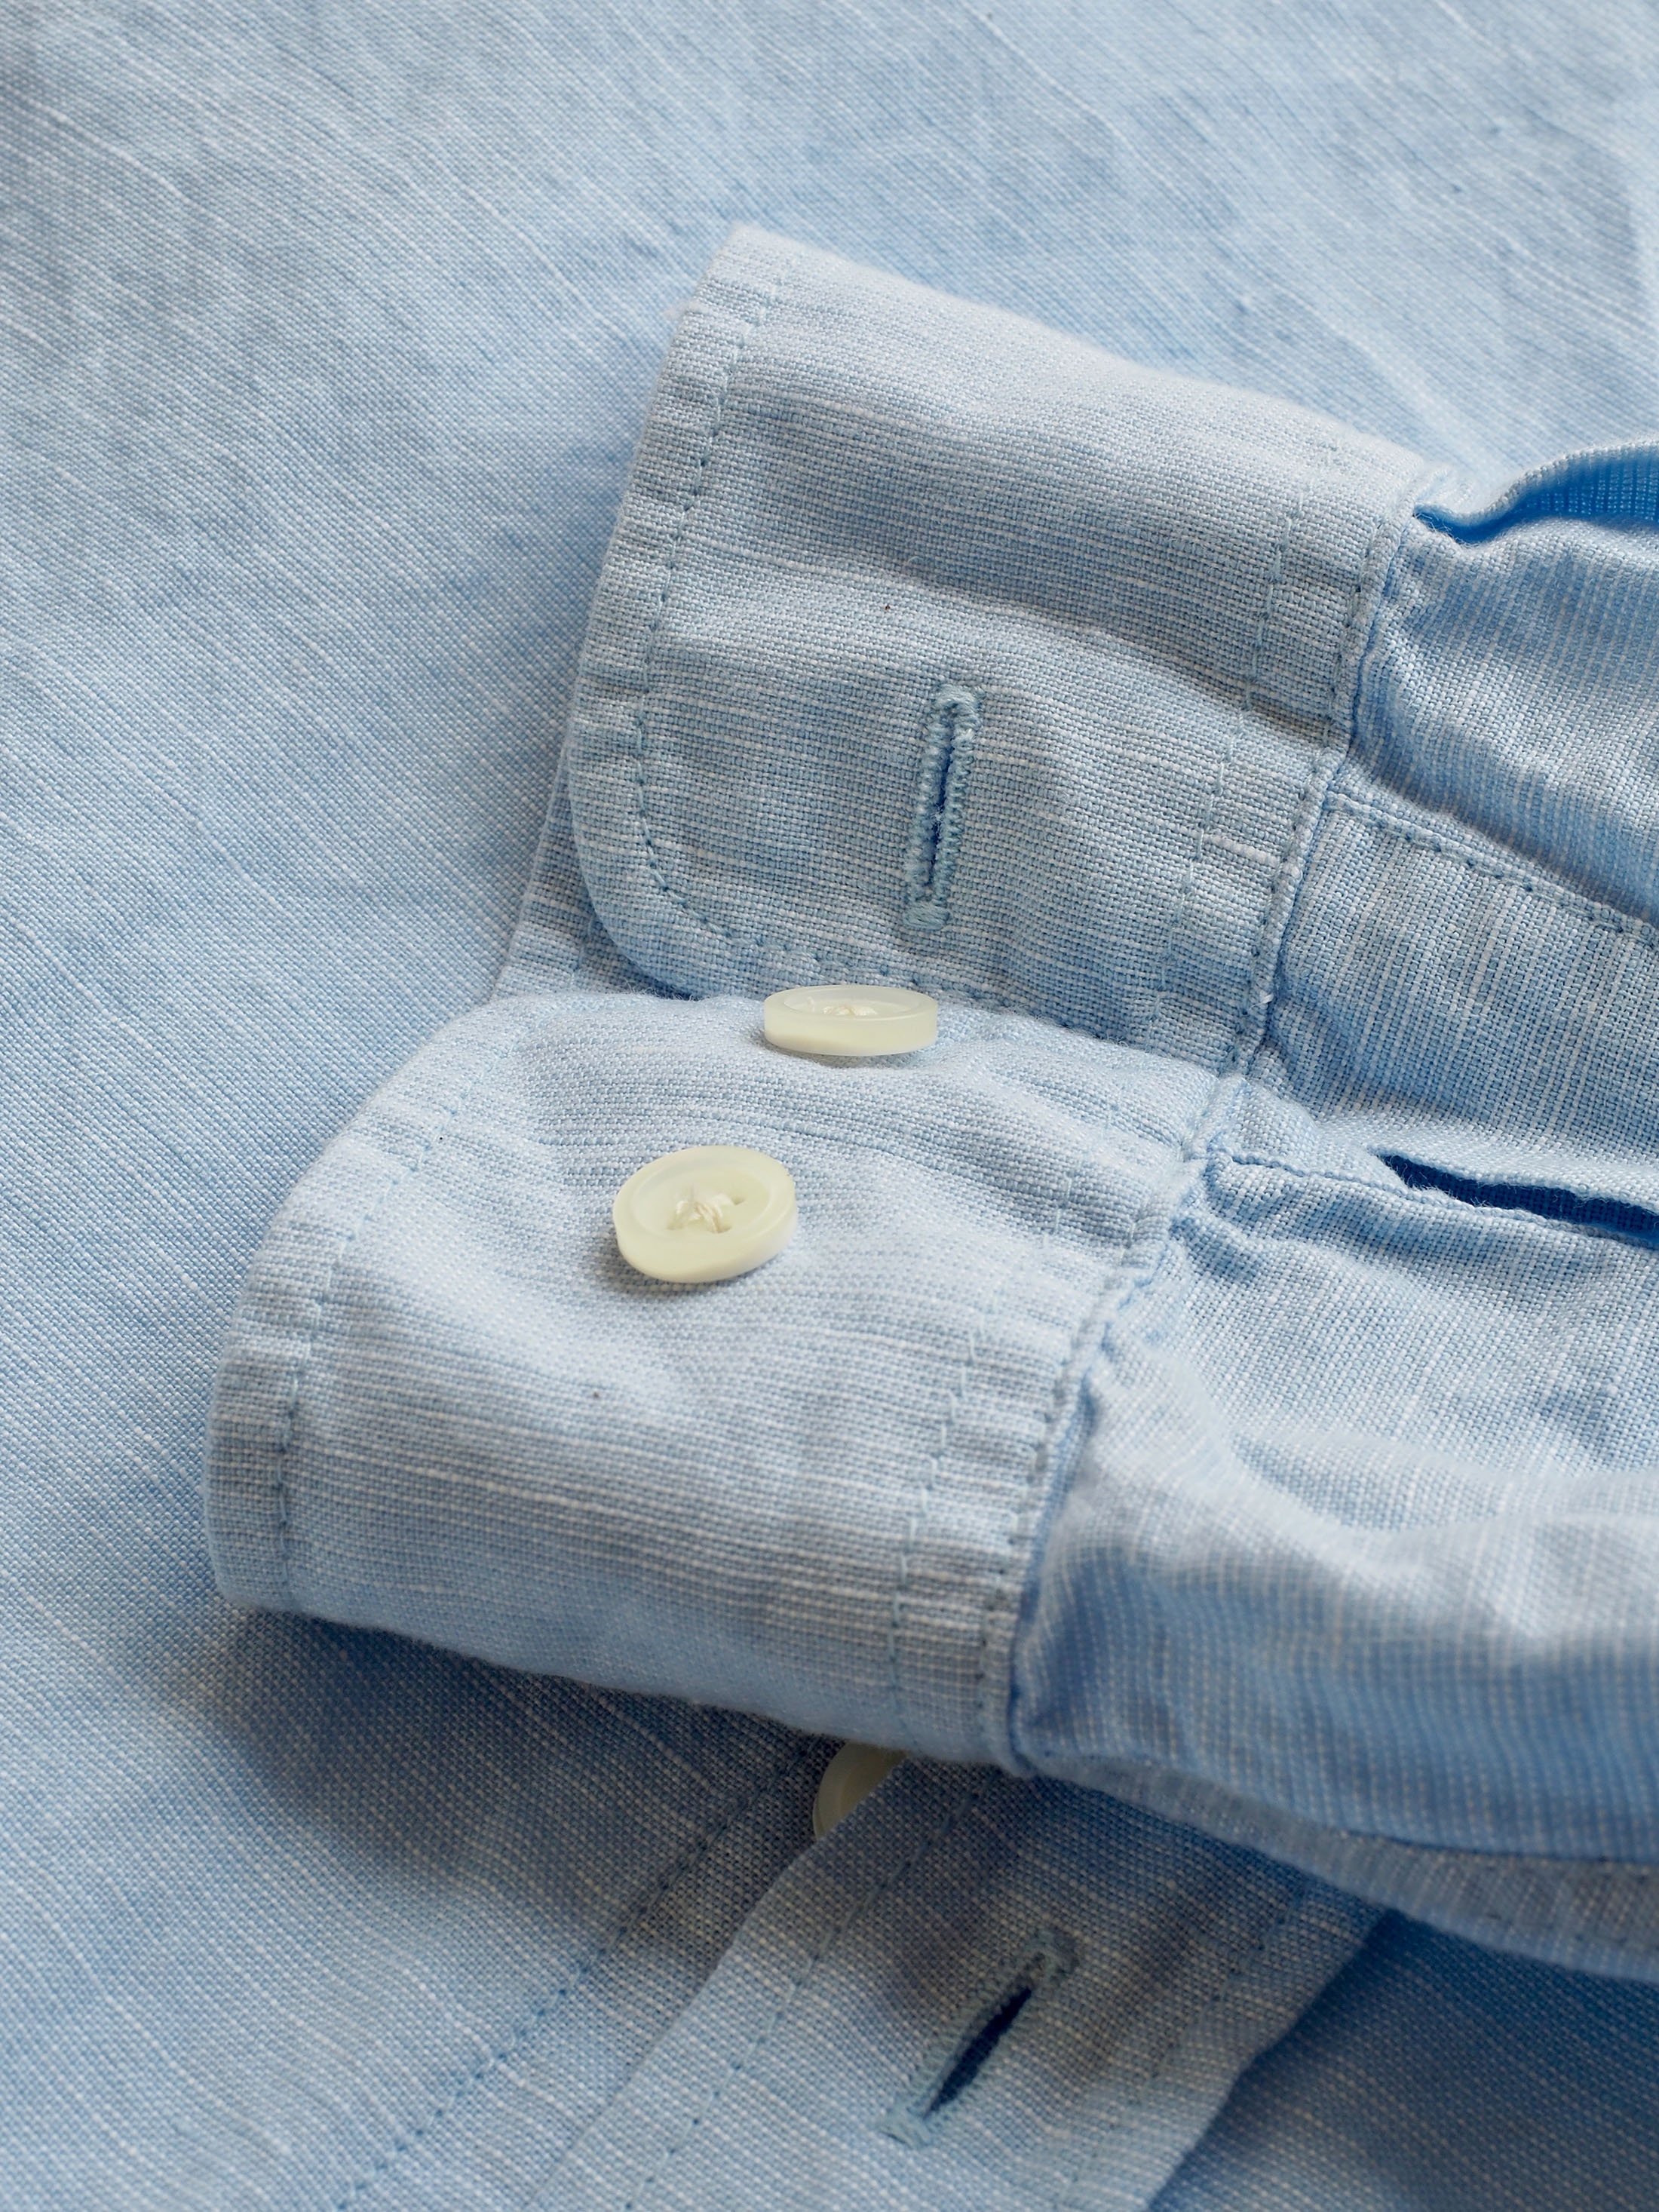 A white or blue linen shirt is a summer wardrobe staple. (Shutterstock Photo)